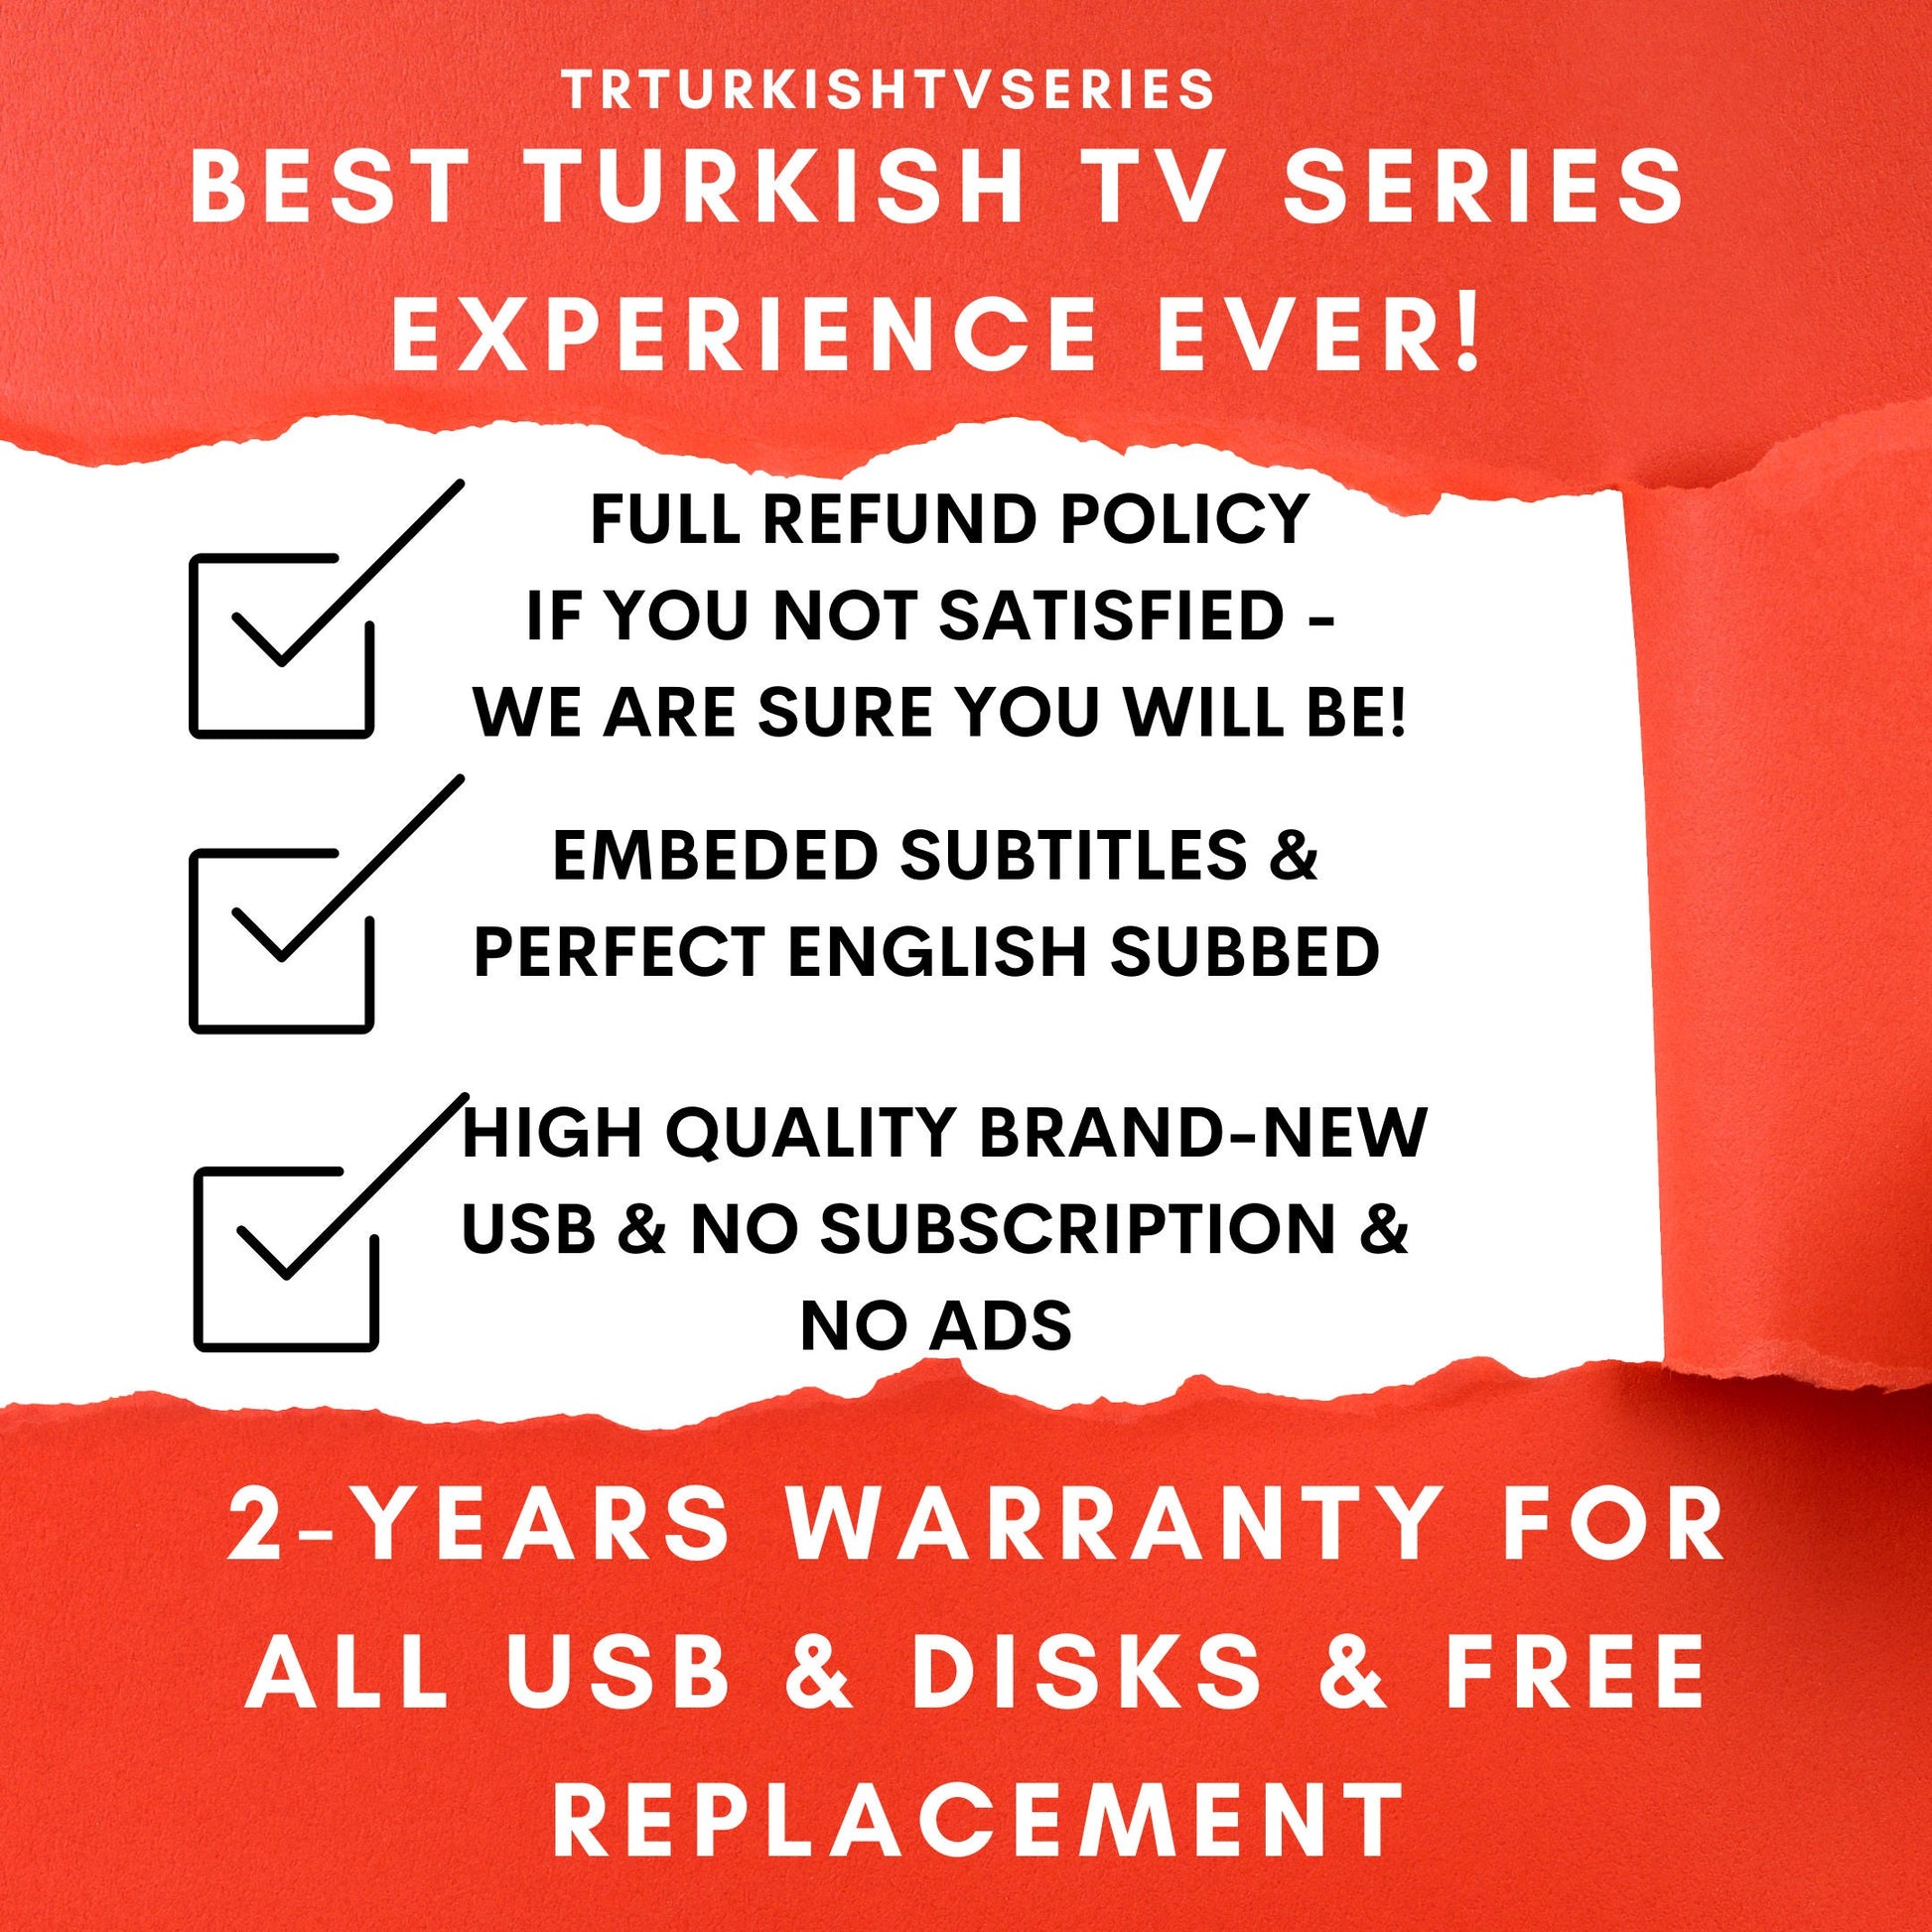 Calikusu Lovebird *All Episodes* Full 1080HD Fahriye Evcen Tv Series Turkish Actor Voices English-Arabic-Italian-Spanish-Deutsch Subtitles